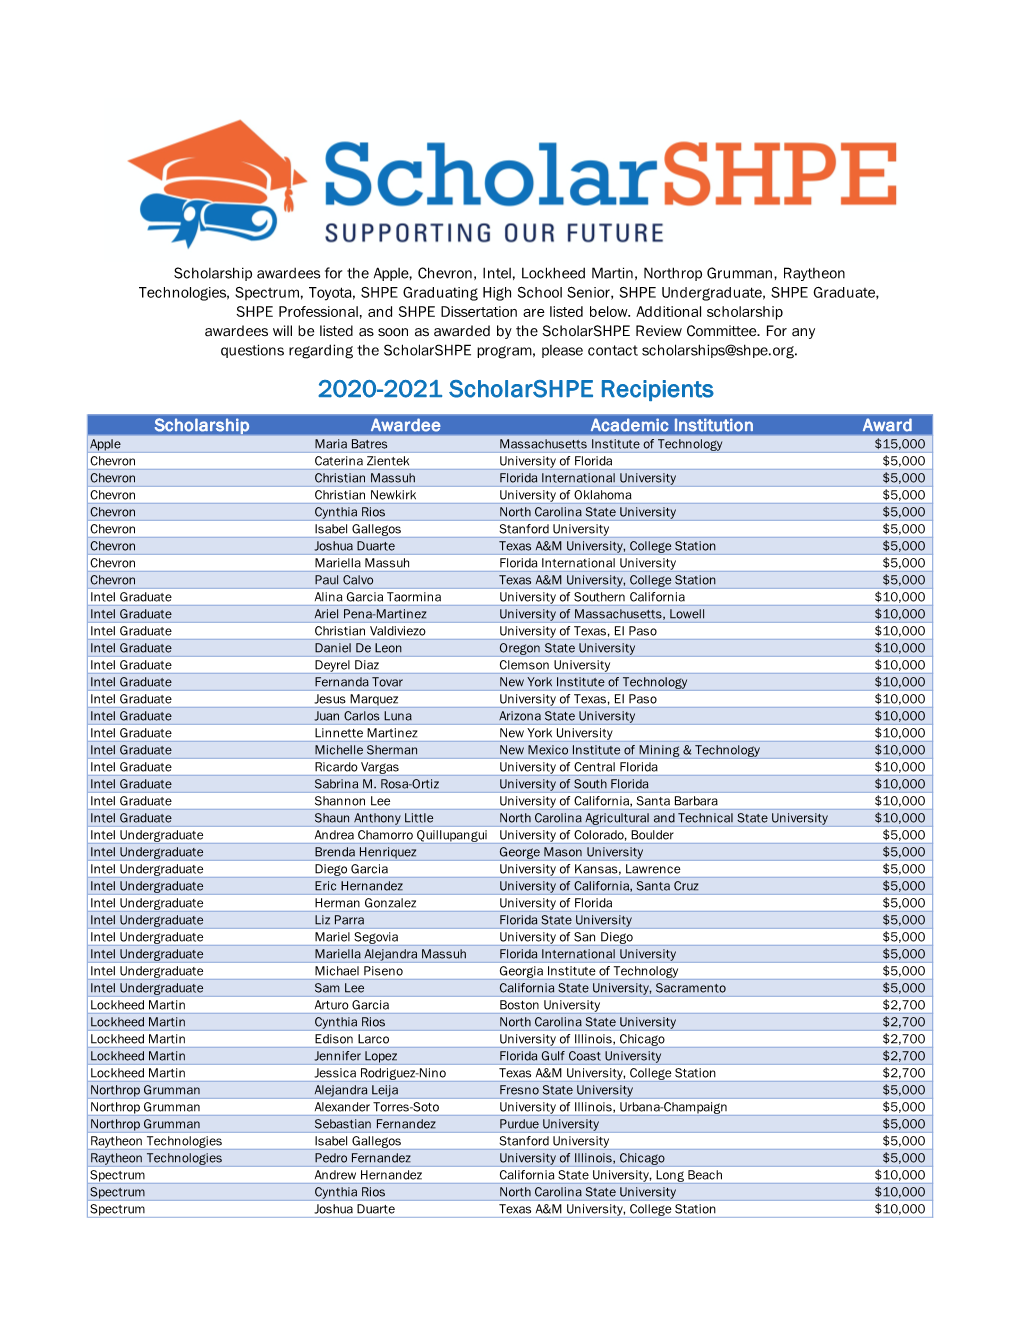 2020-2021 Scholarship Recipients 09.04.20